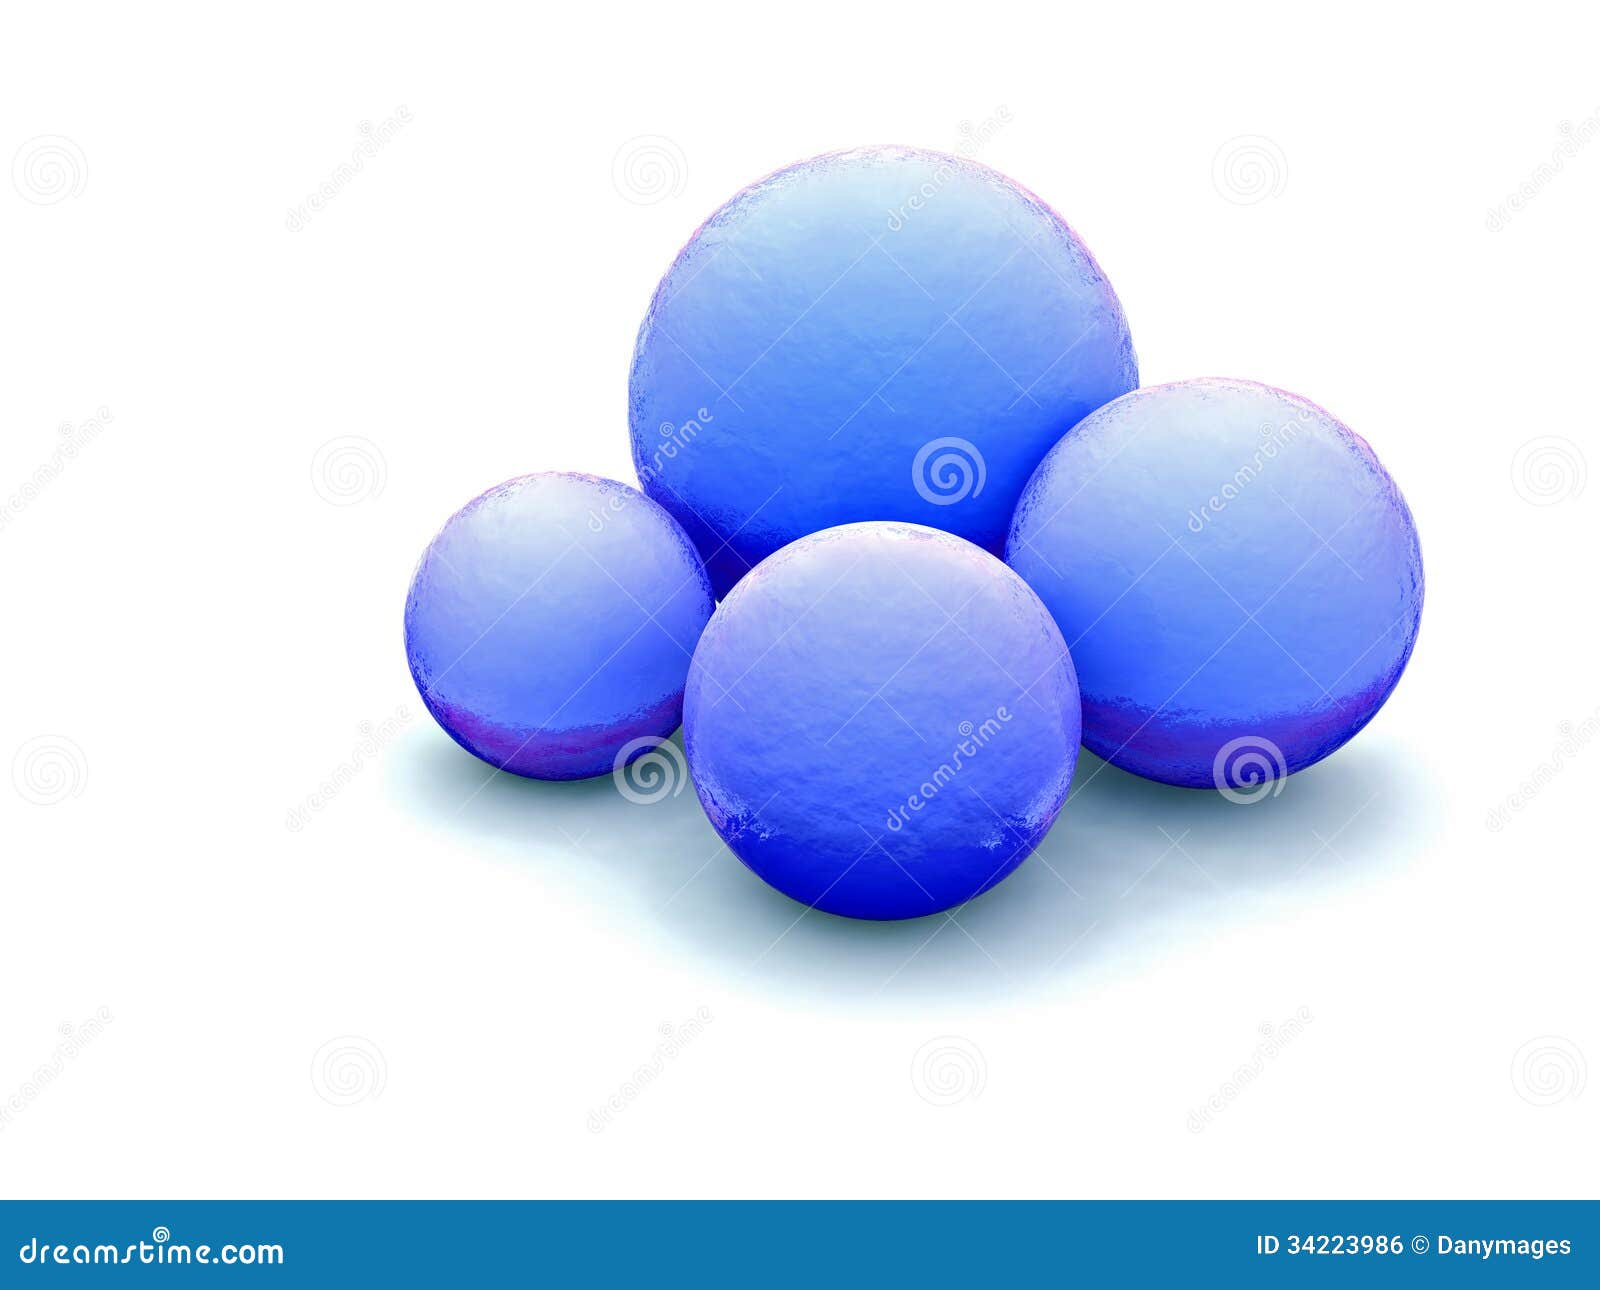 Blue Balls Royalty Free Stock Image - Image: 34223986.